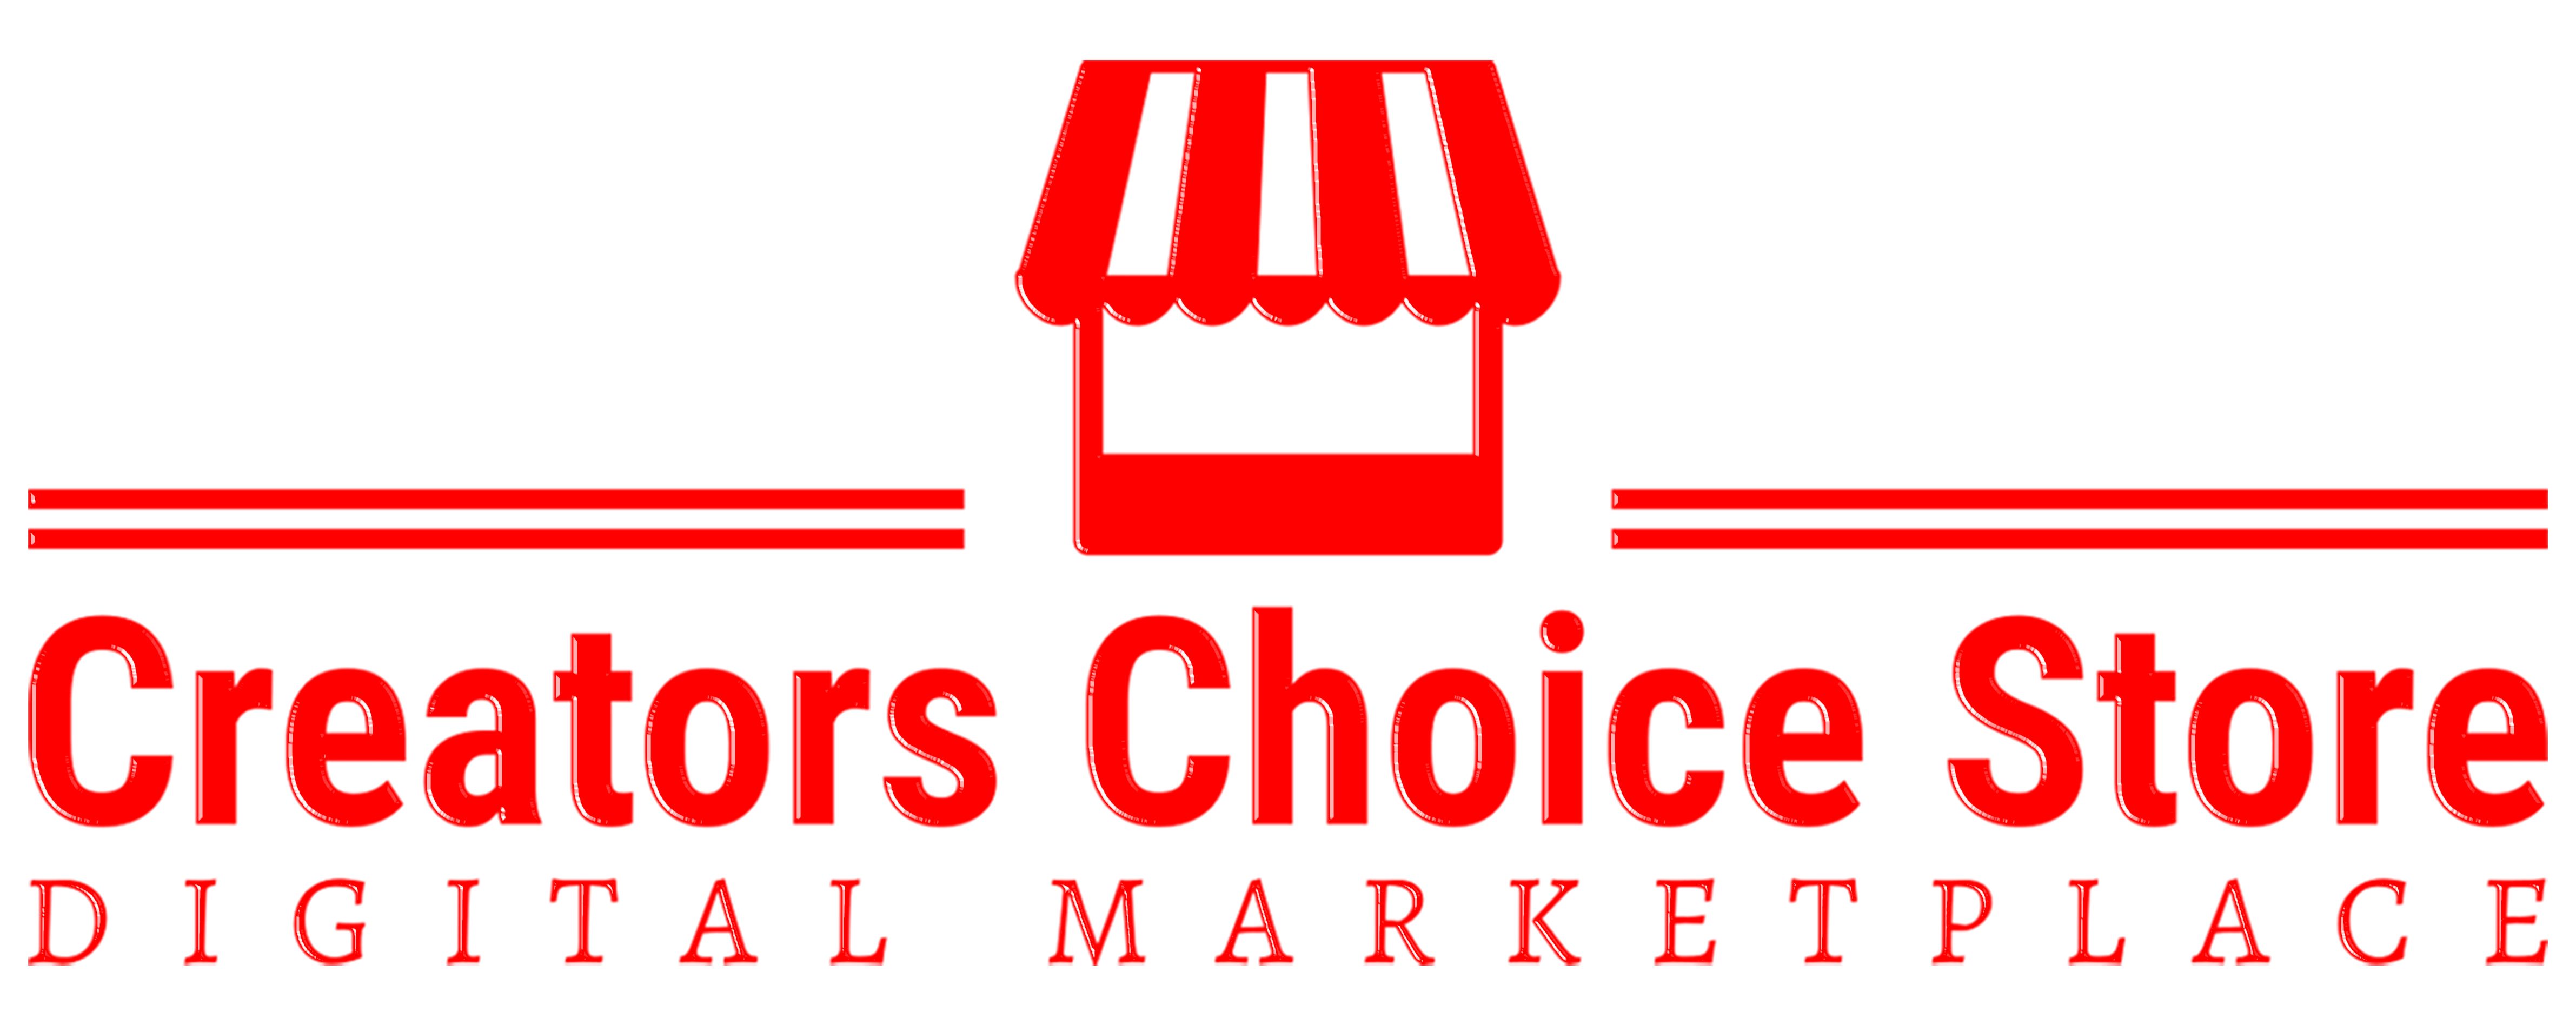 Creators Choice Digital Marketplace & Store